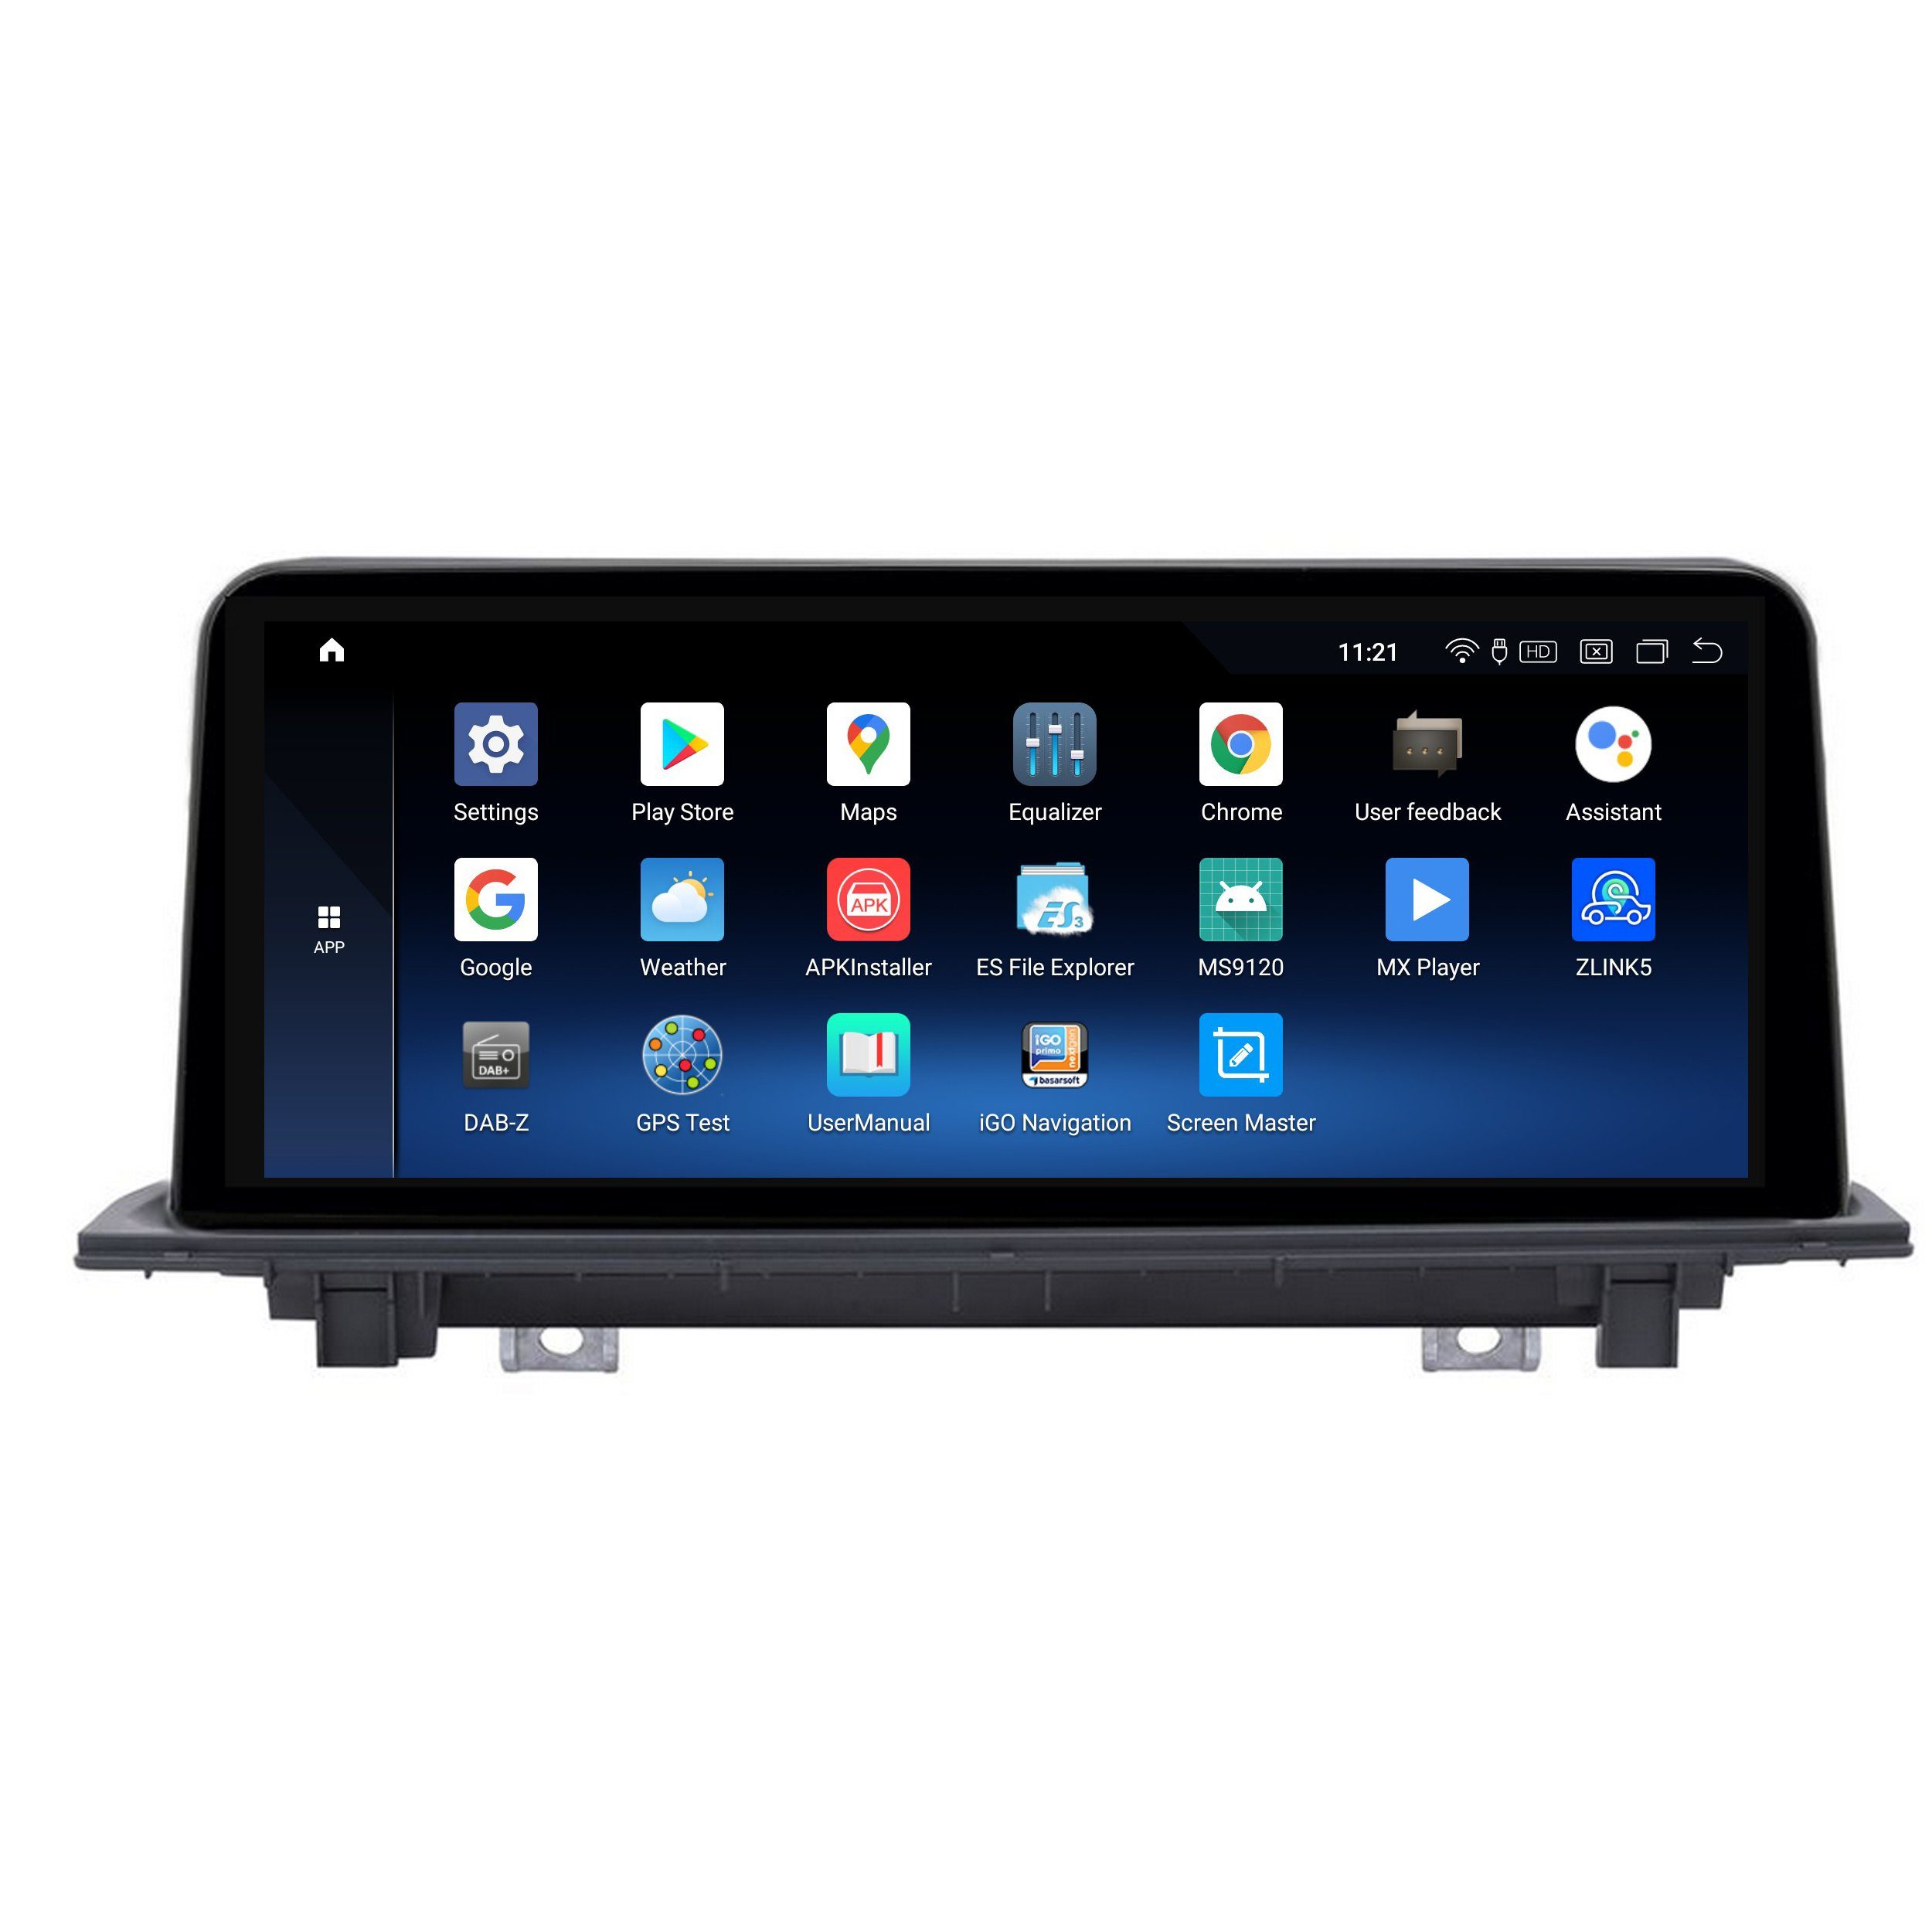 TAFFIO Für BMW X1 F48 Touchscreen Android Navi 10.25" F39 Einbau-Navigationsgerät X2 GPS EVO CarPlay